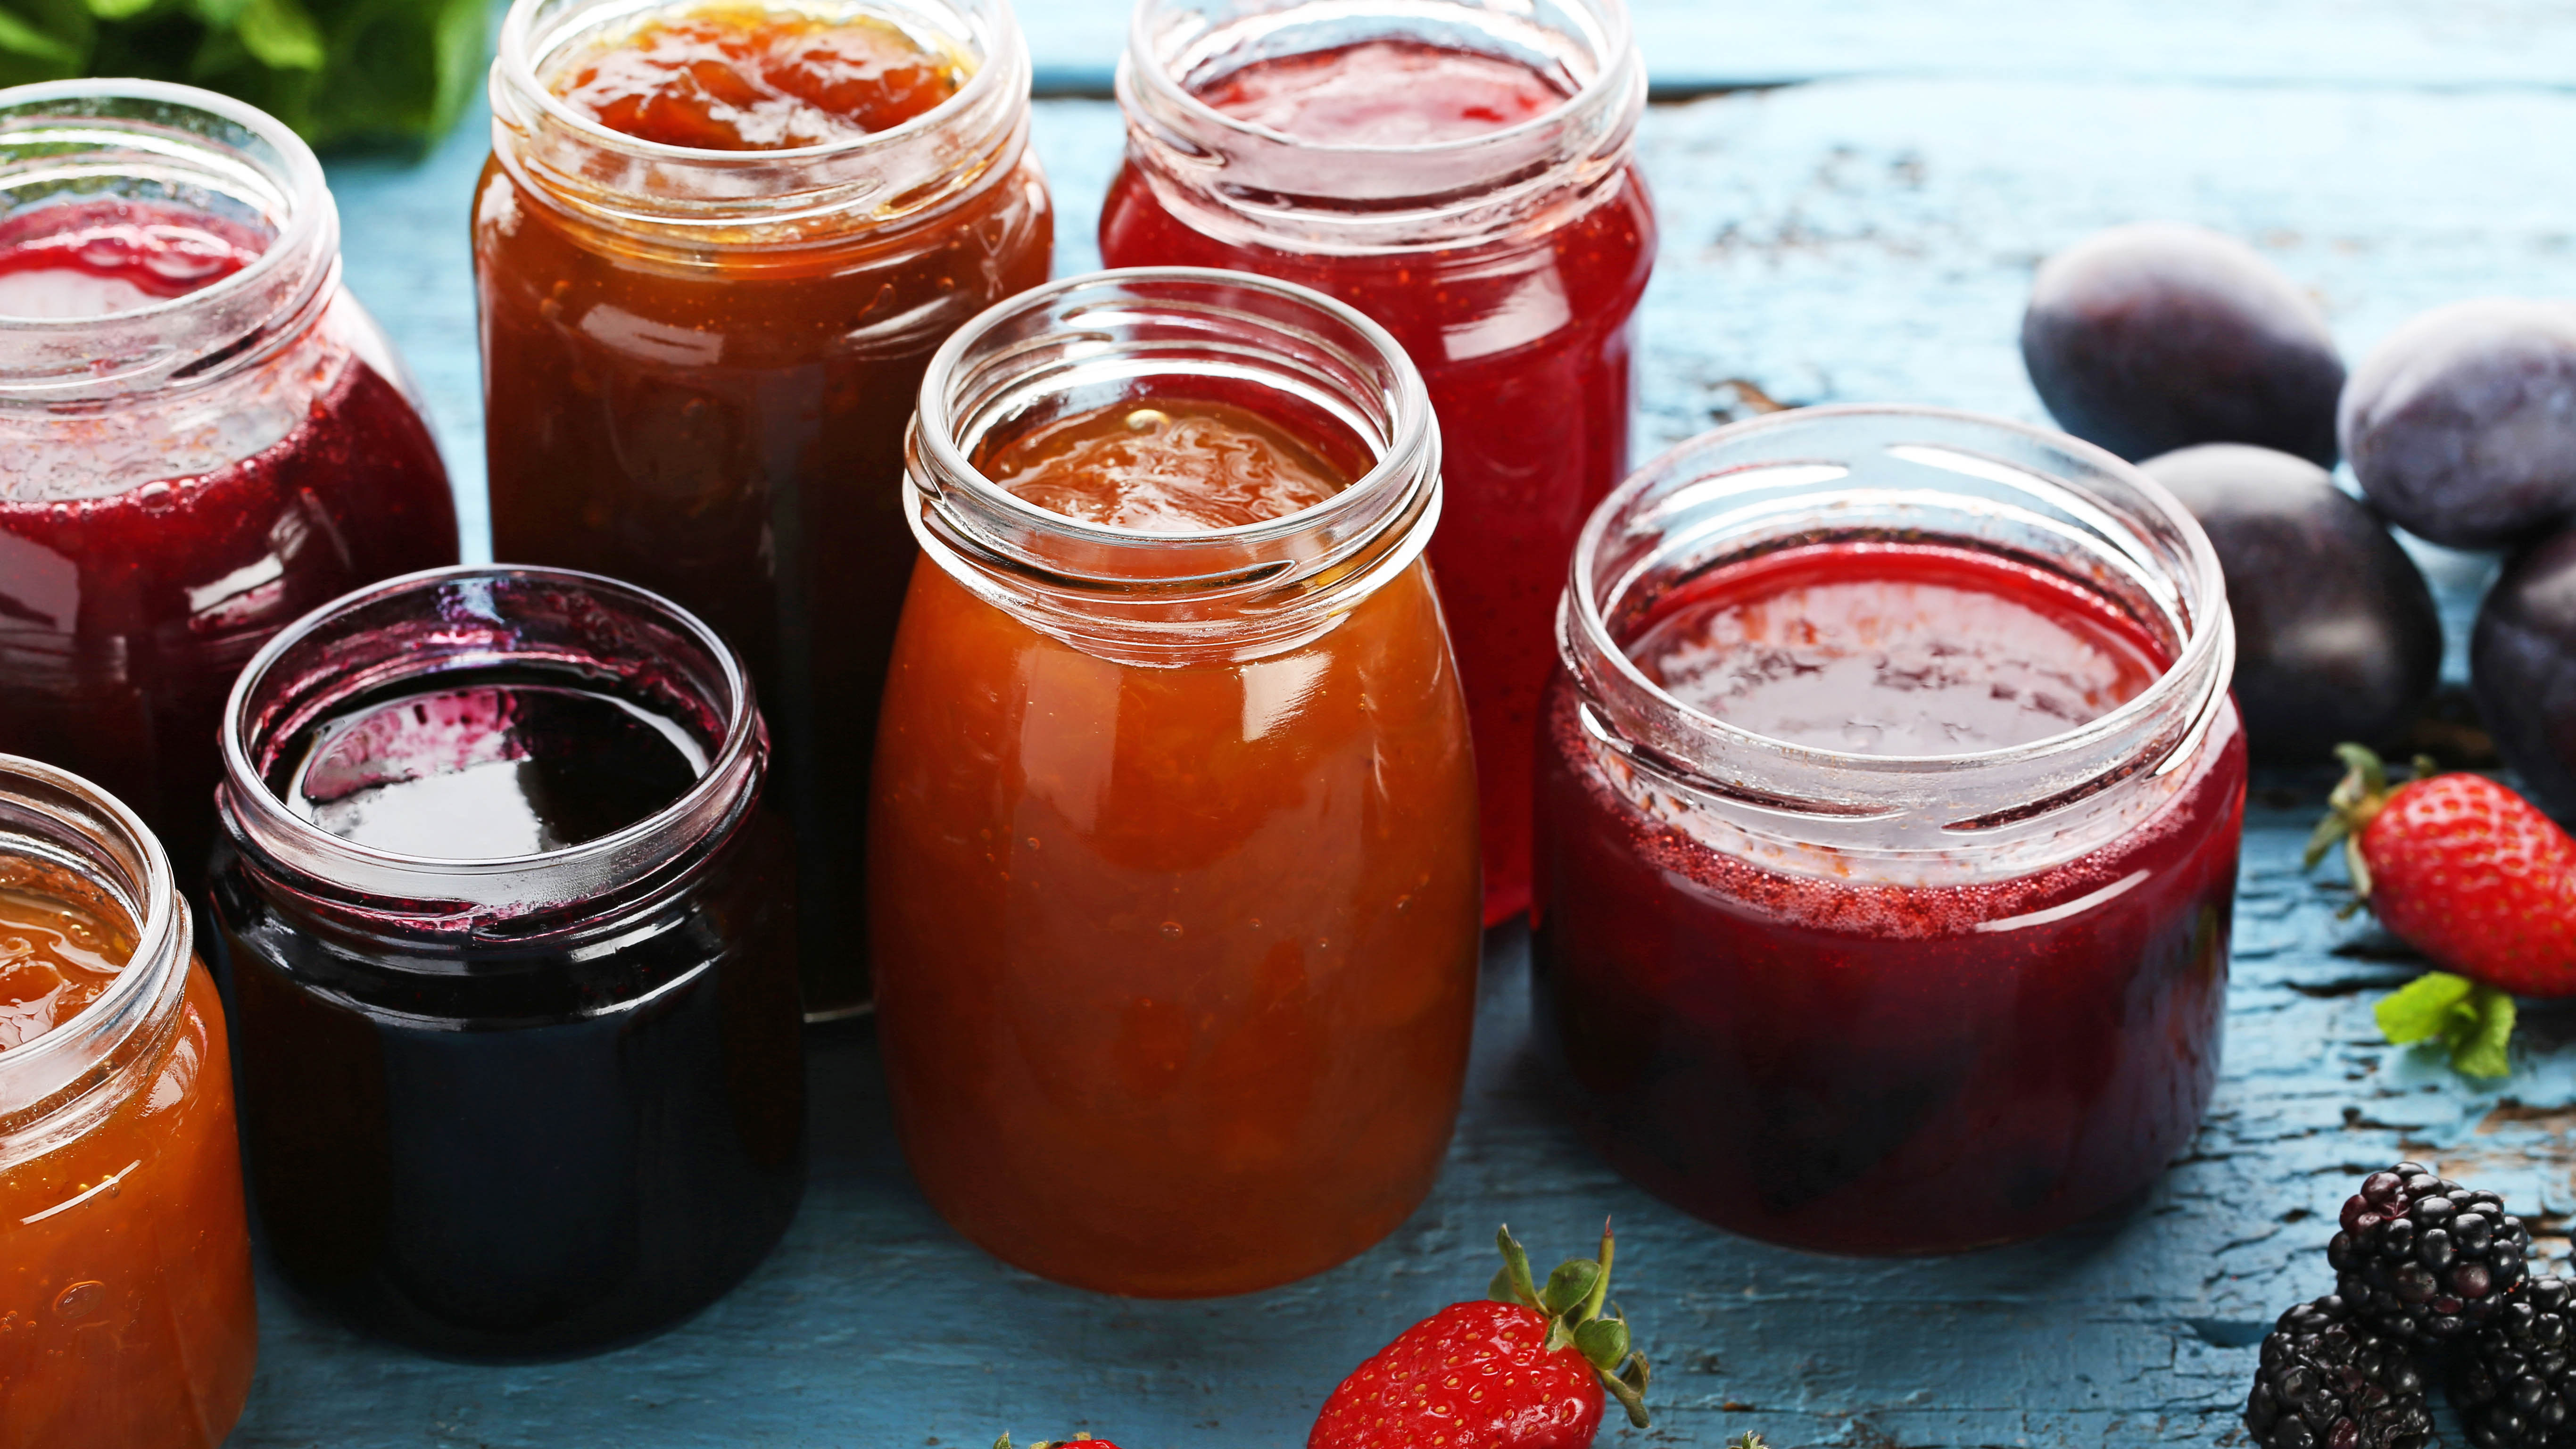 Variety of jams in glass jars